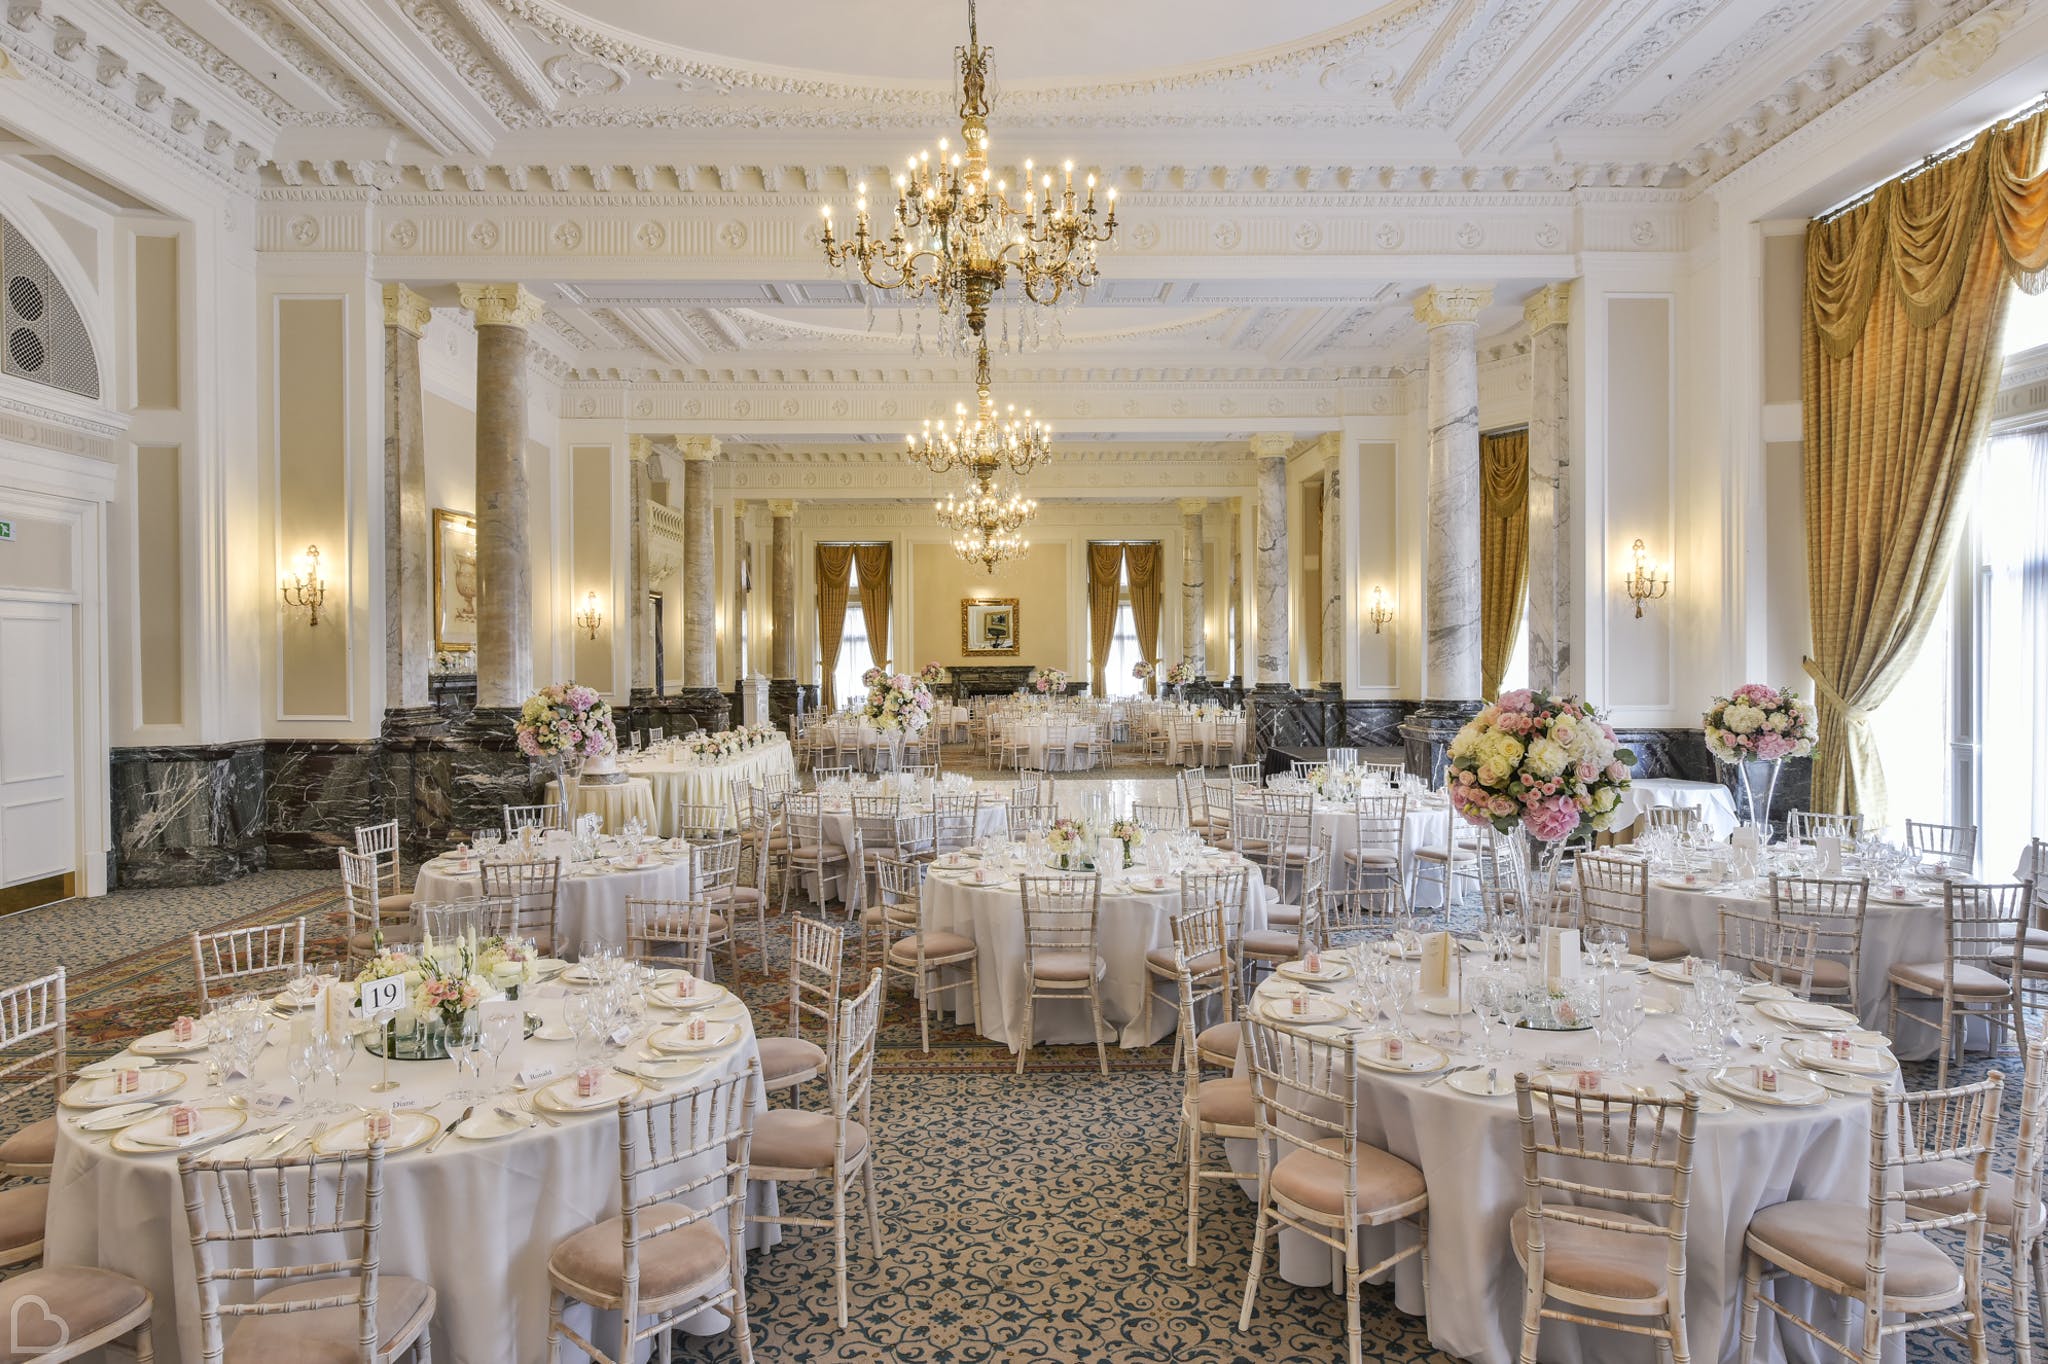 The landmark a wedding reception venue in london, ready to host a wedding lunch 